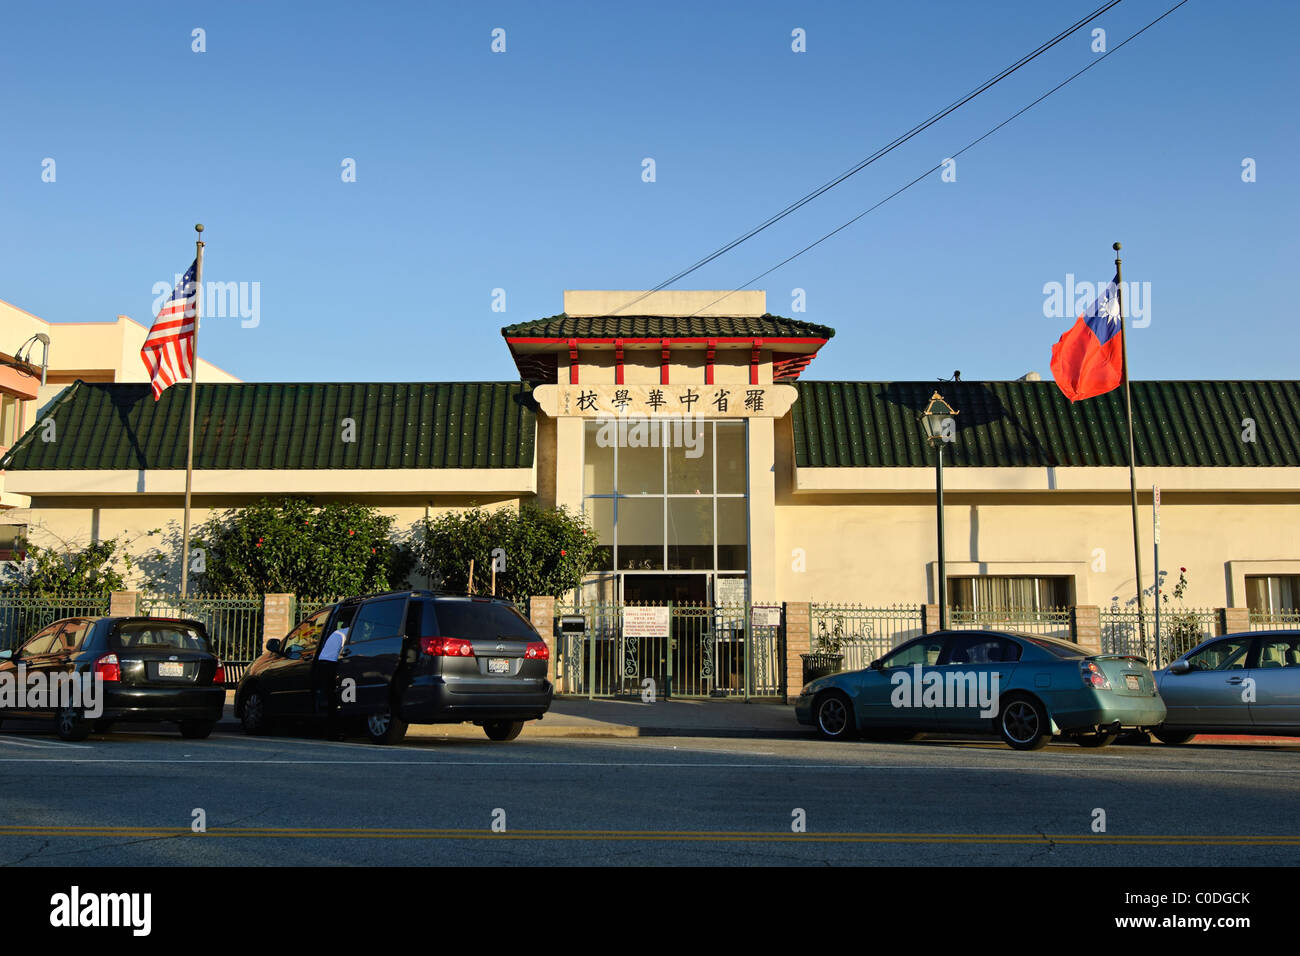 Chinesische Schule in Los Angeles Chinatown gelegen. Stockfoto